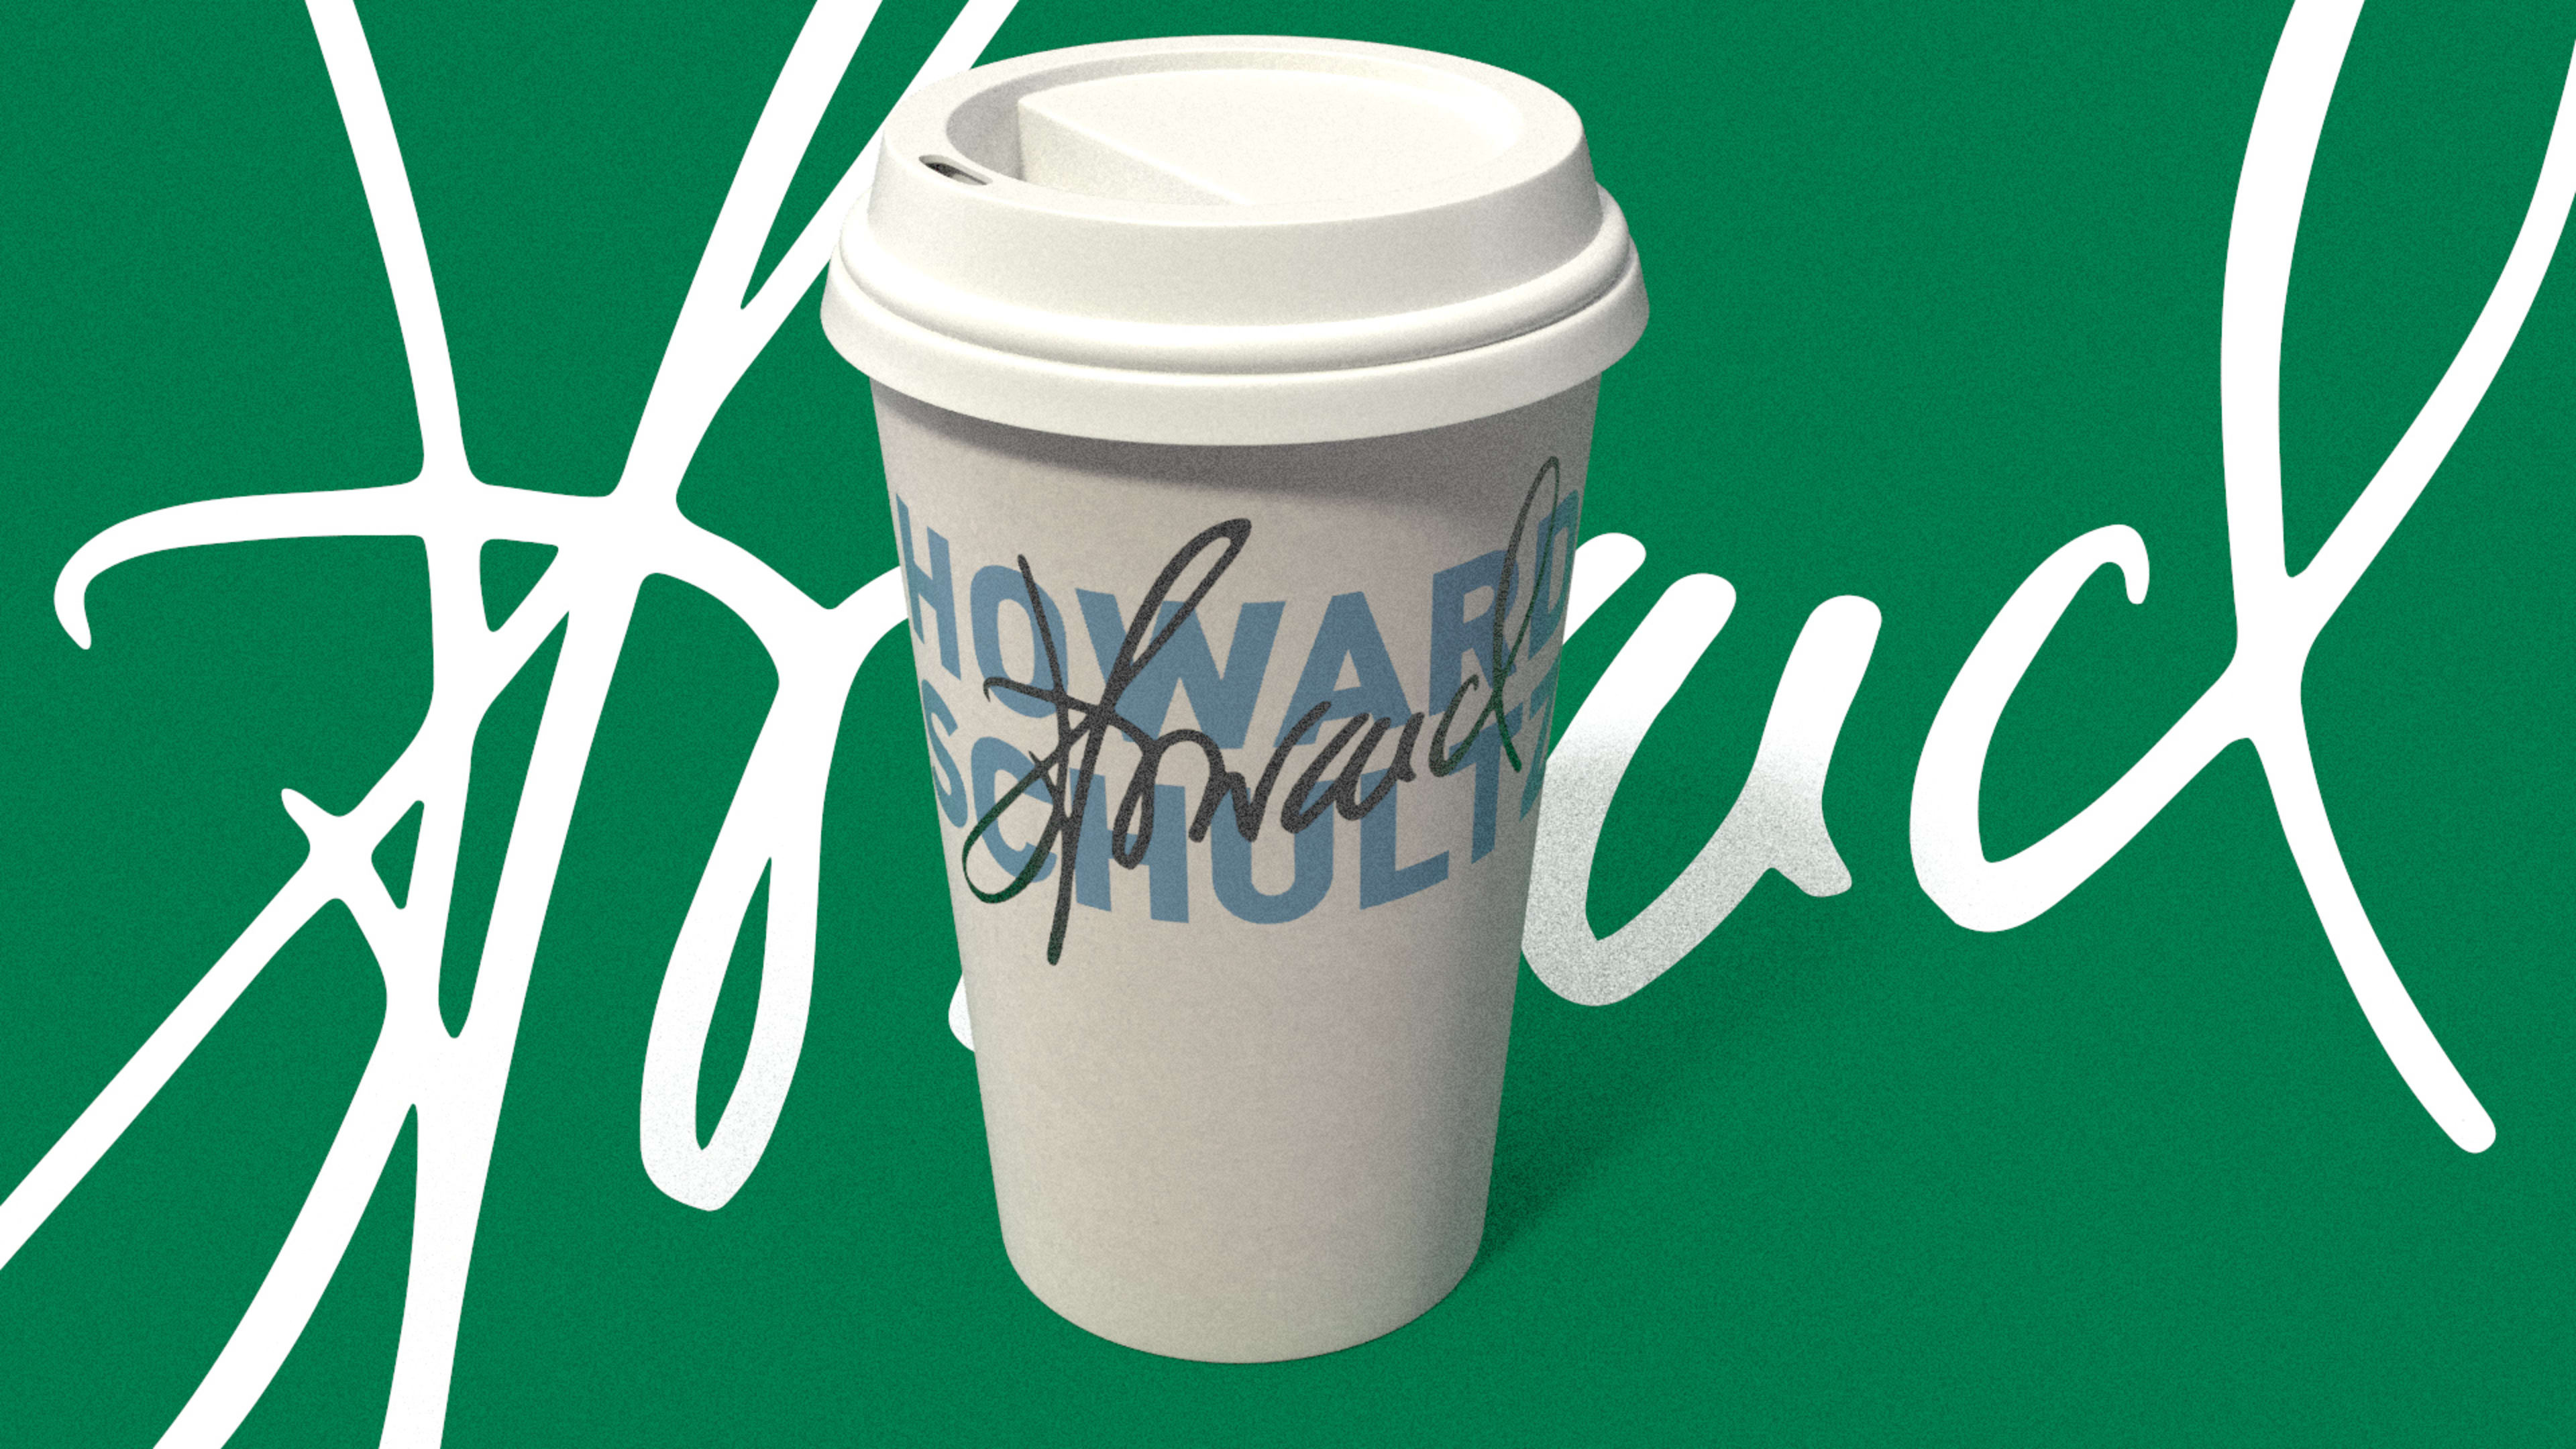 Howard Schultz’s logo looks like he signed it on a Starbucks cup